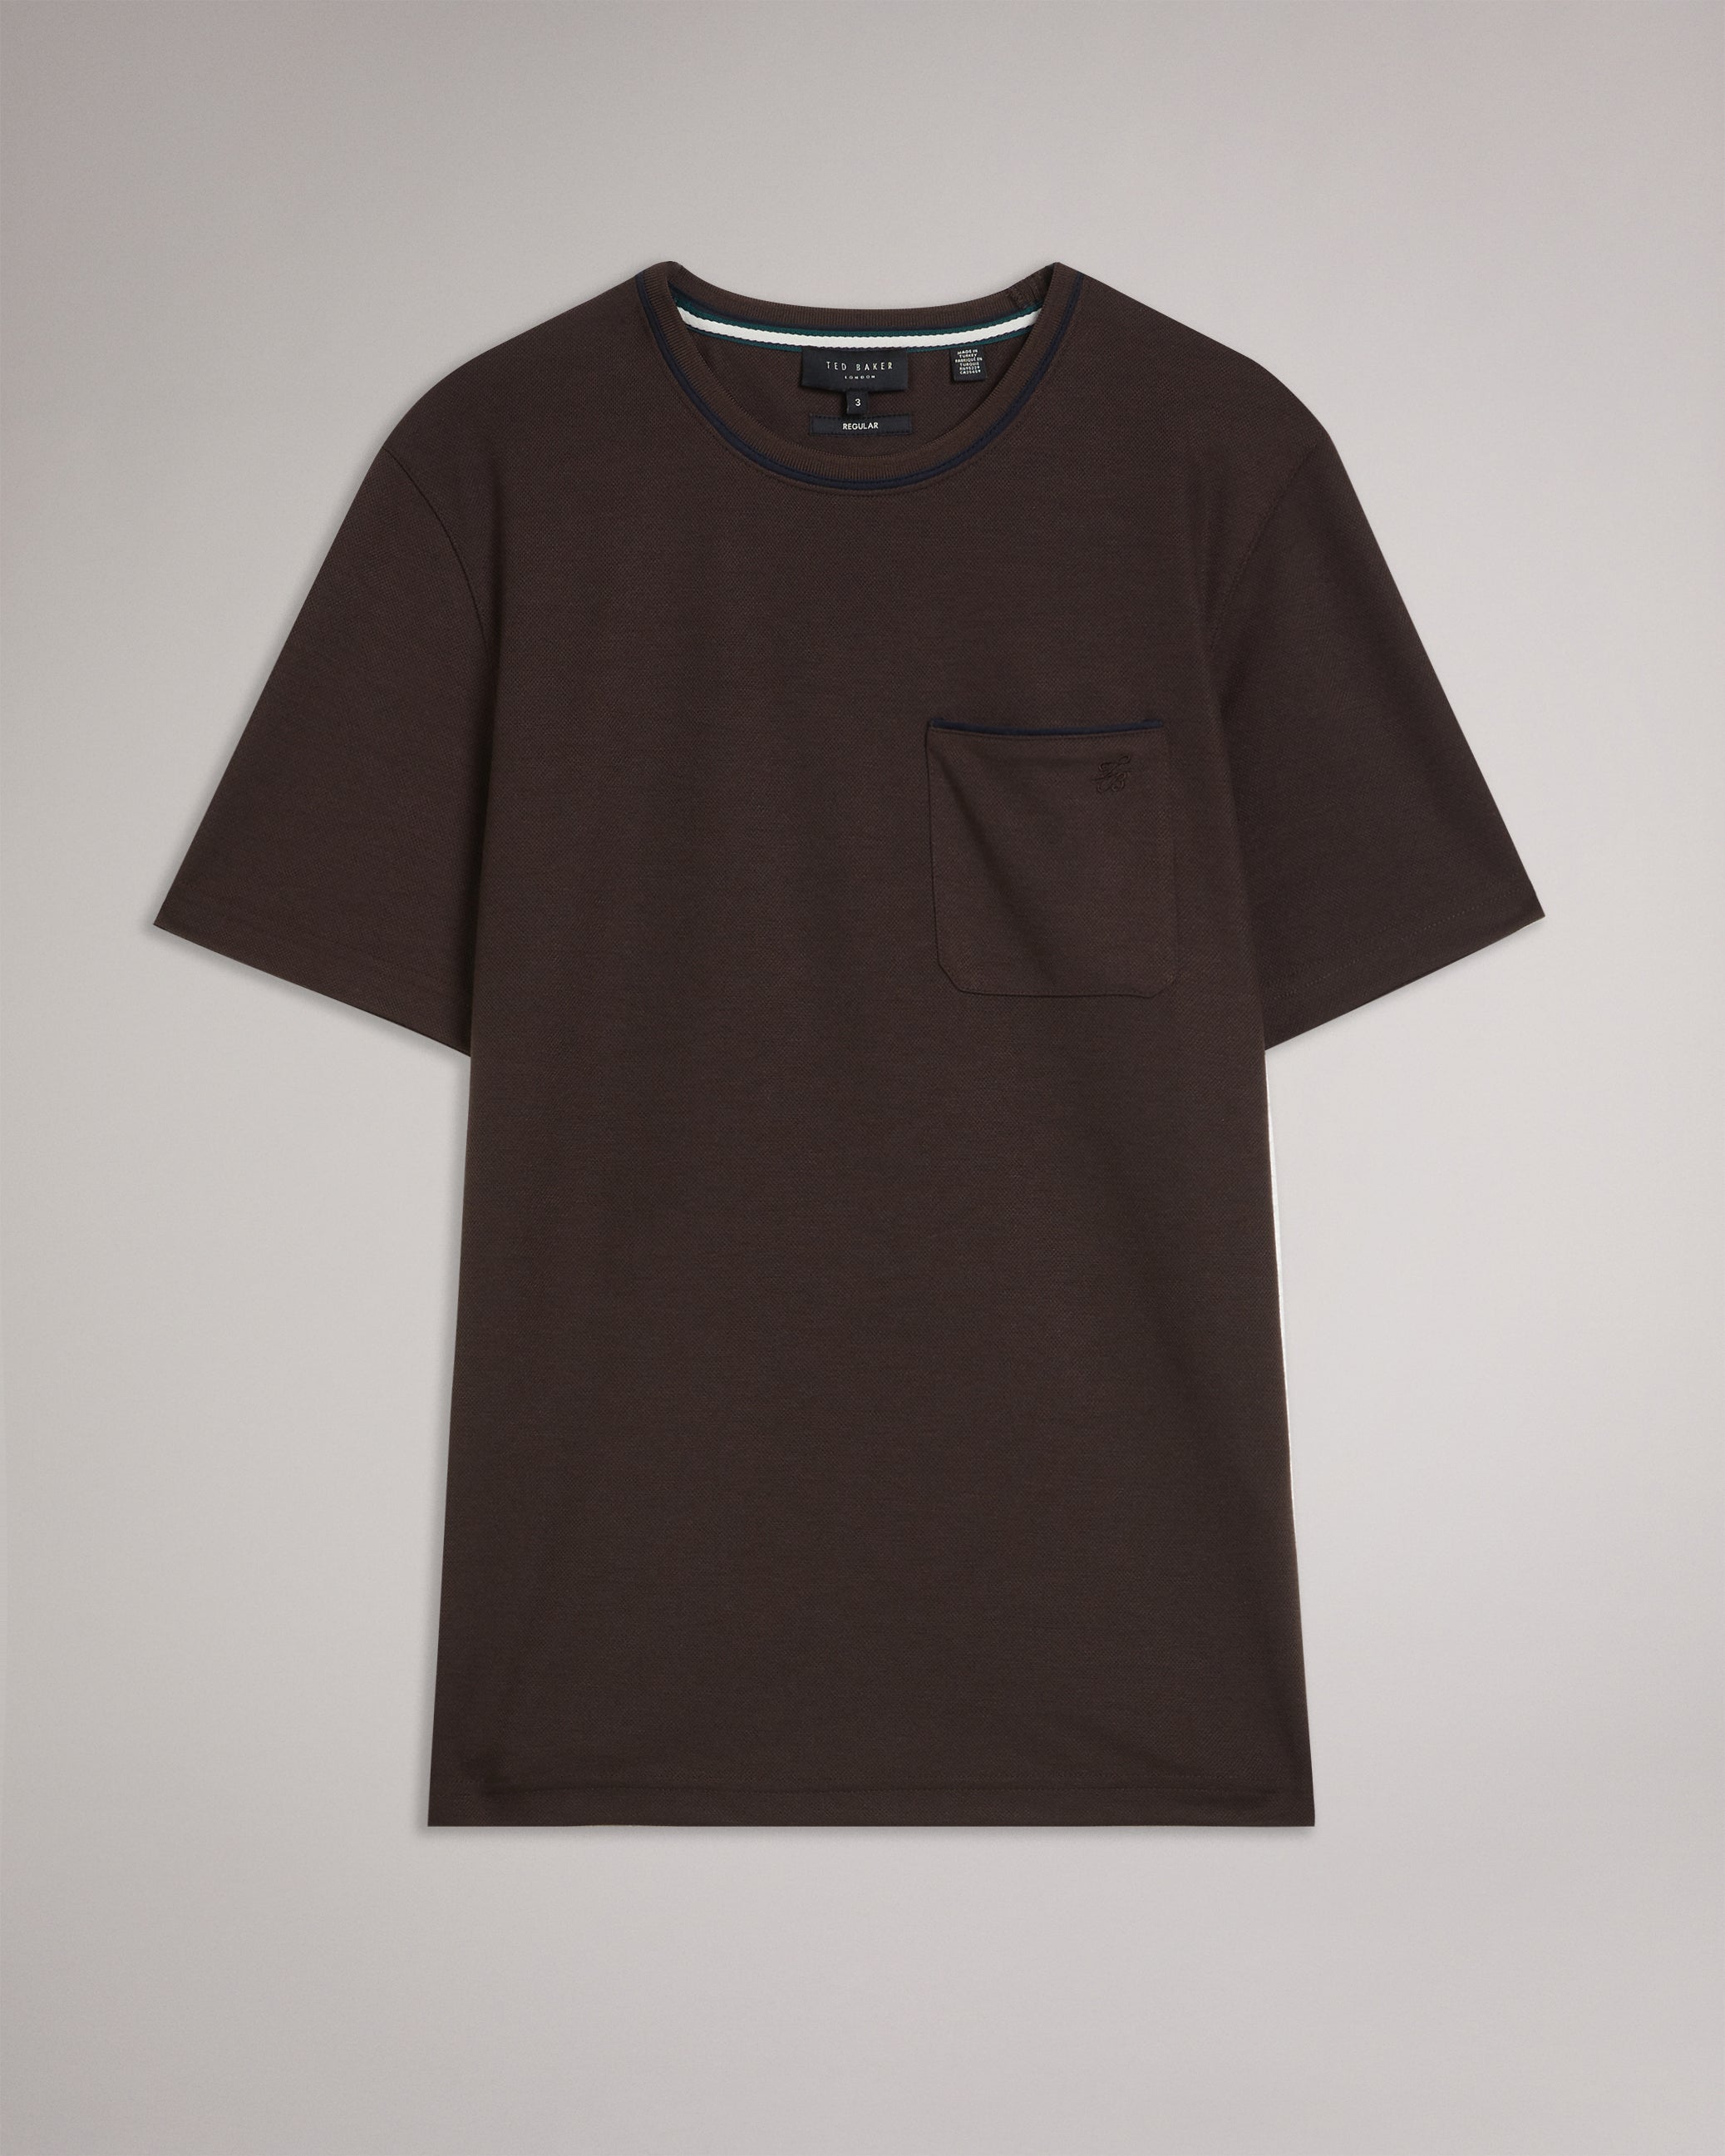 Grine Short Sleeve T-Shirt With Suedette Trim Brn-Choc